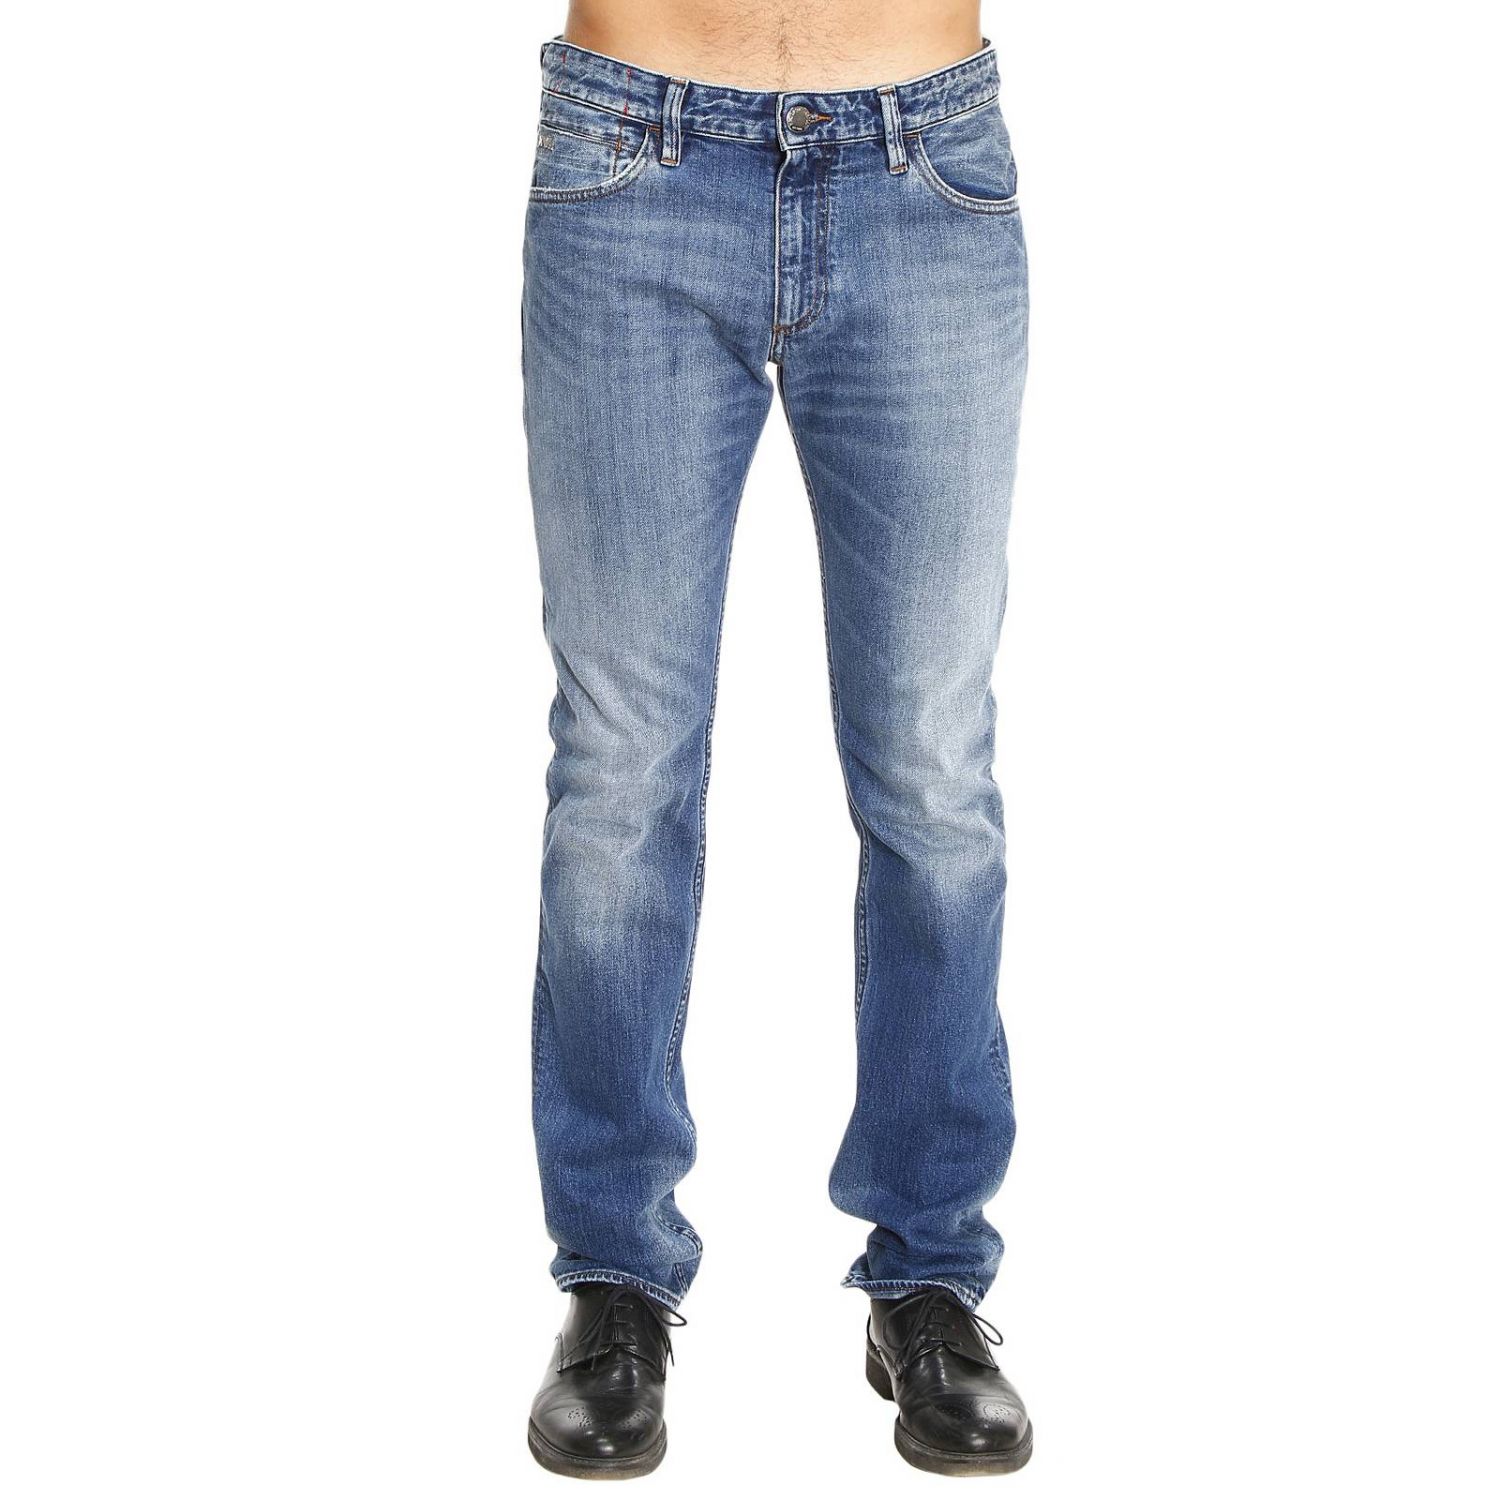 Emporio Armani Outlet: Jeans men | Jeans Emporio Armani Men Denim ...